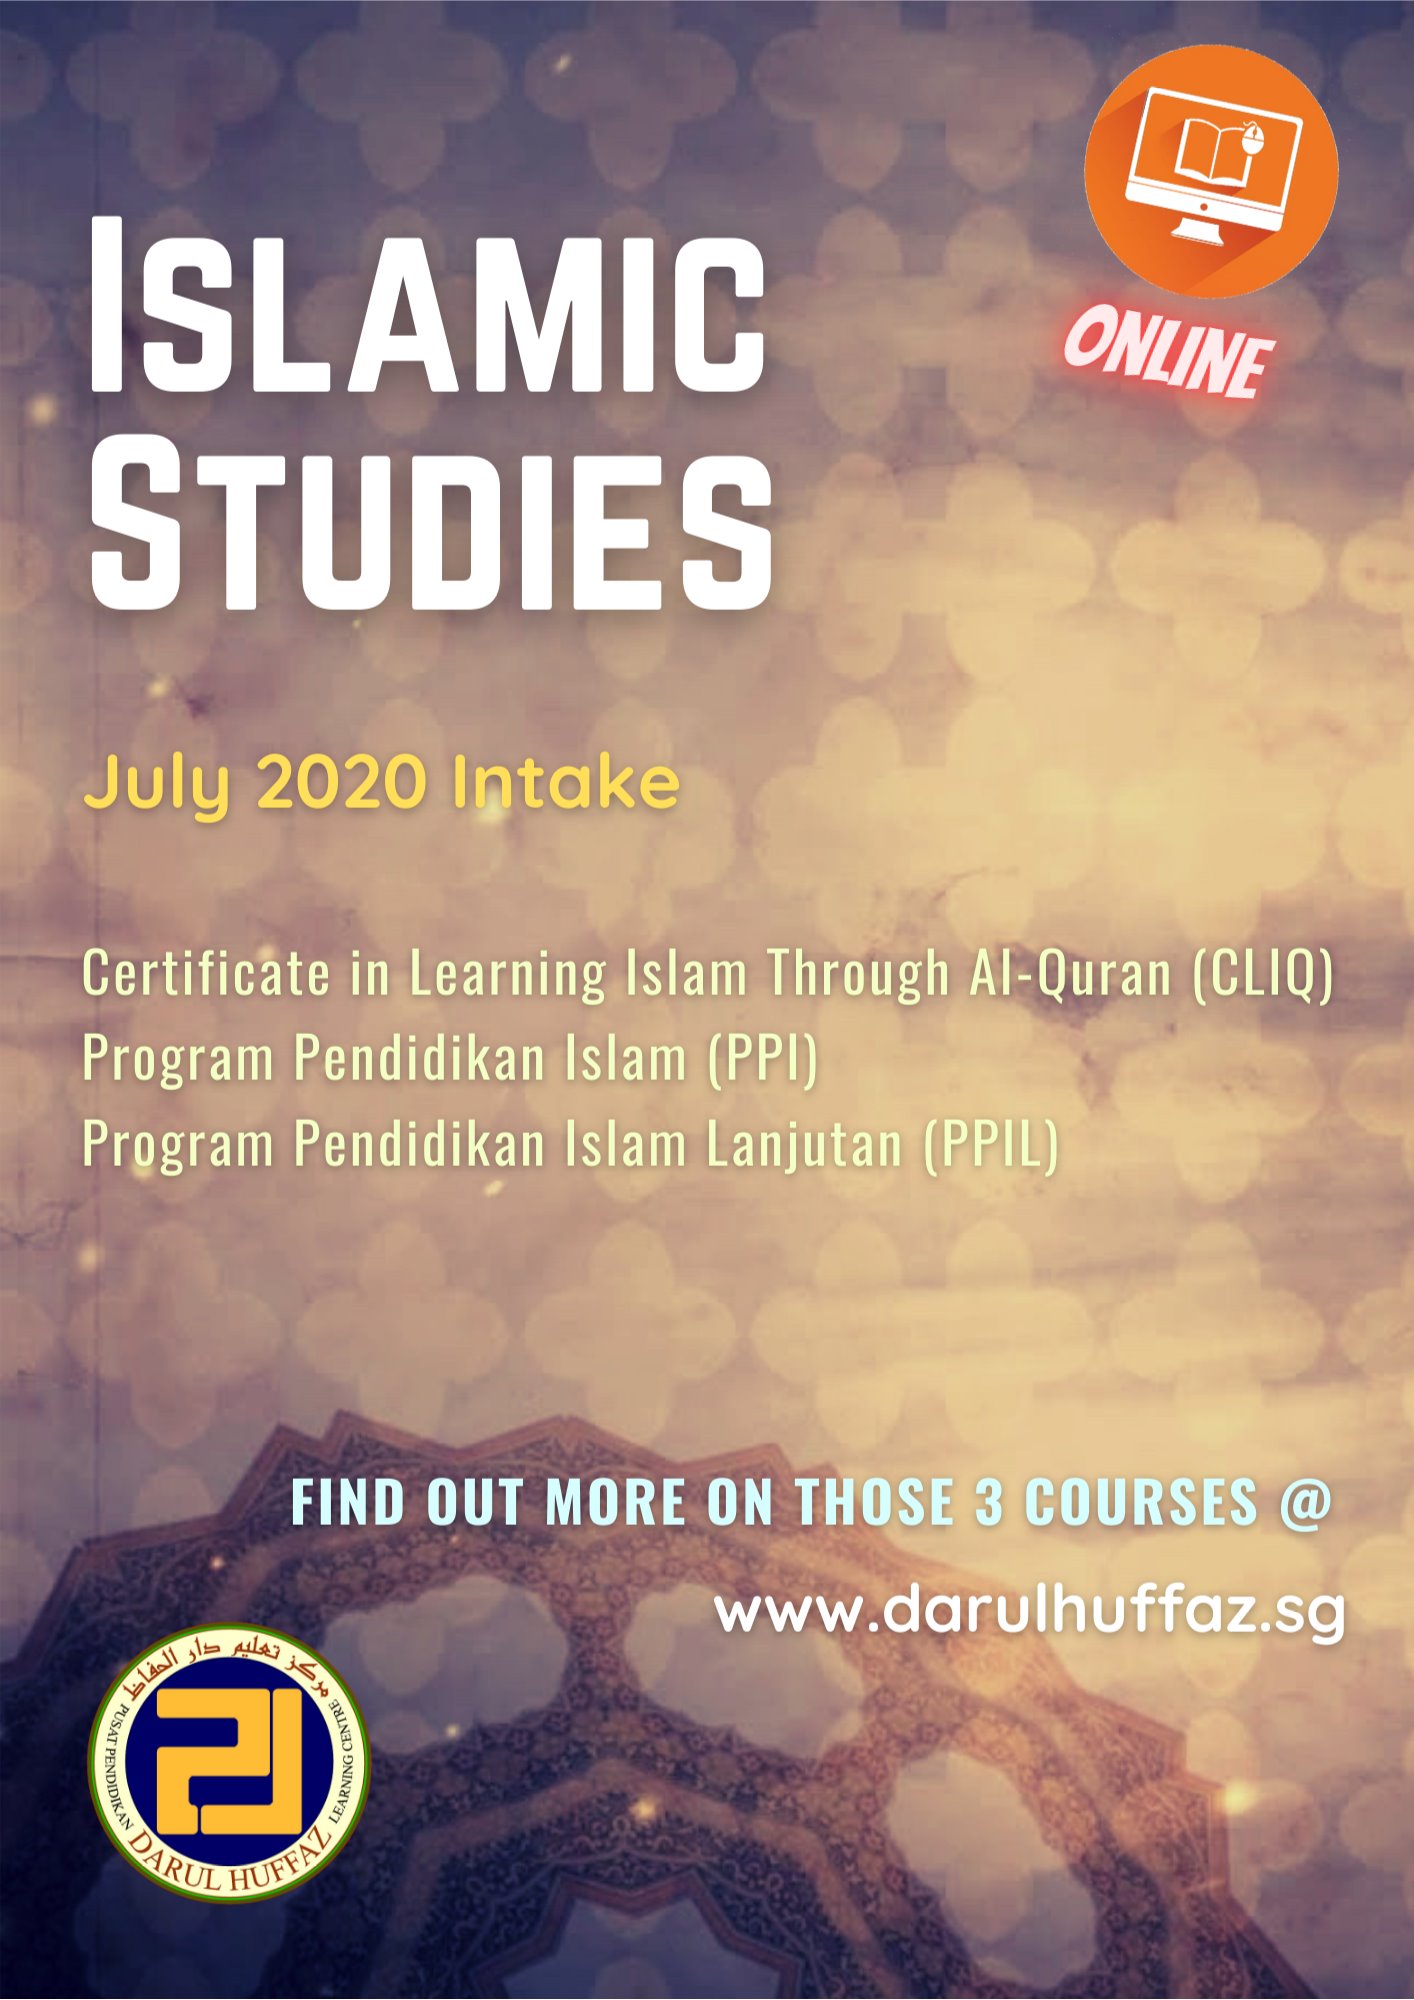 Islamic Studies @ Darul Huffaz, July 2020 intake